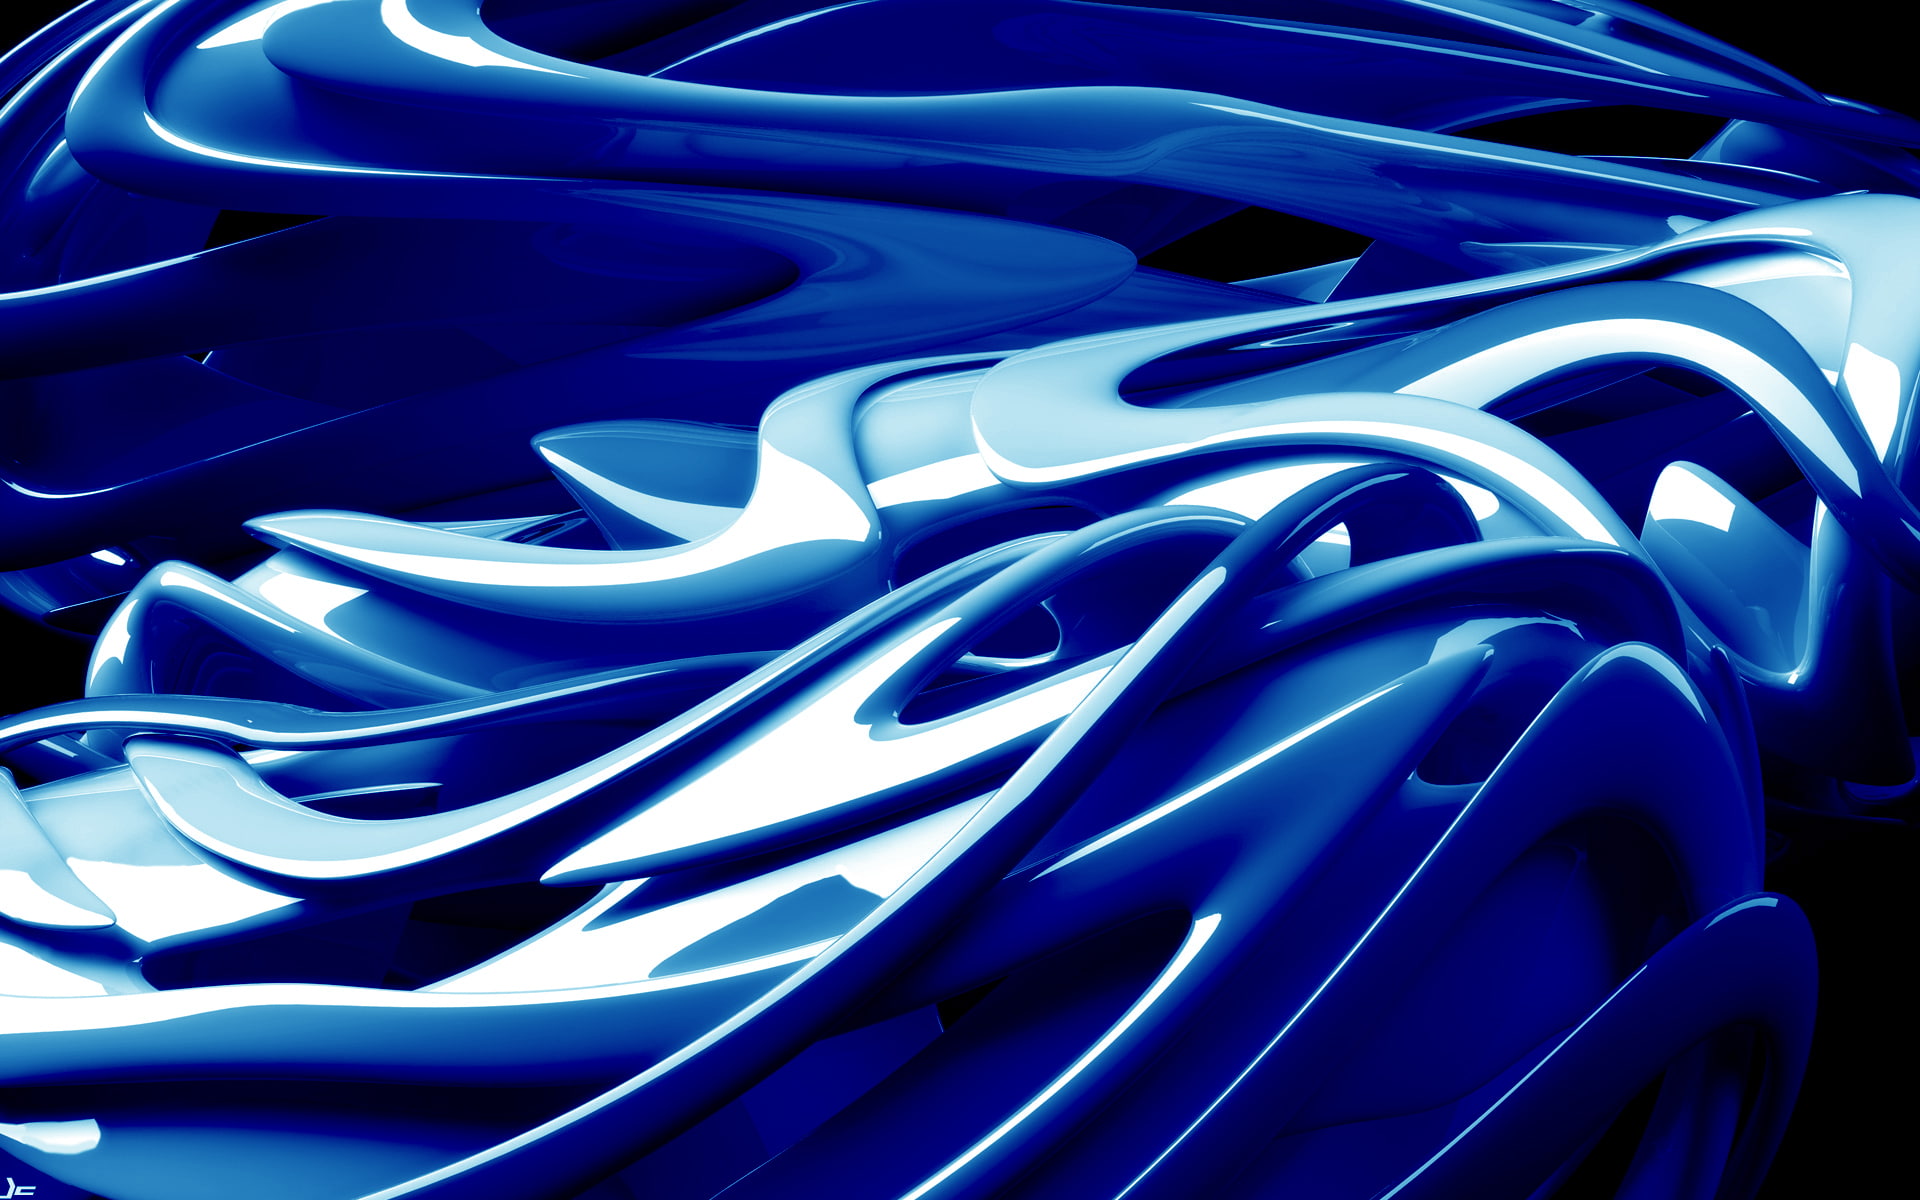 Fractal HD, blue abstract illustration